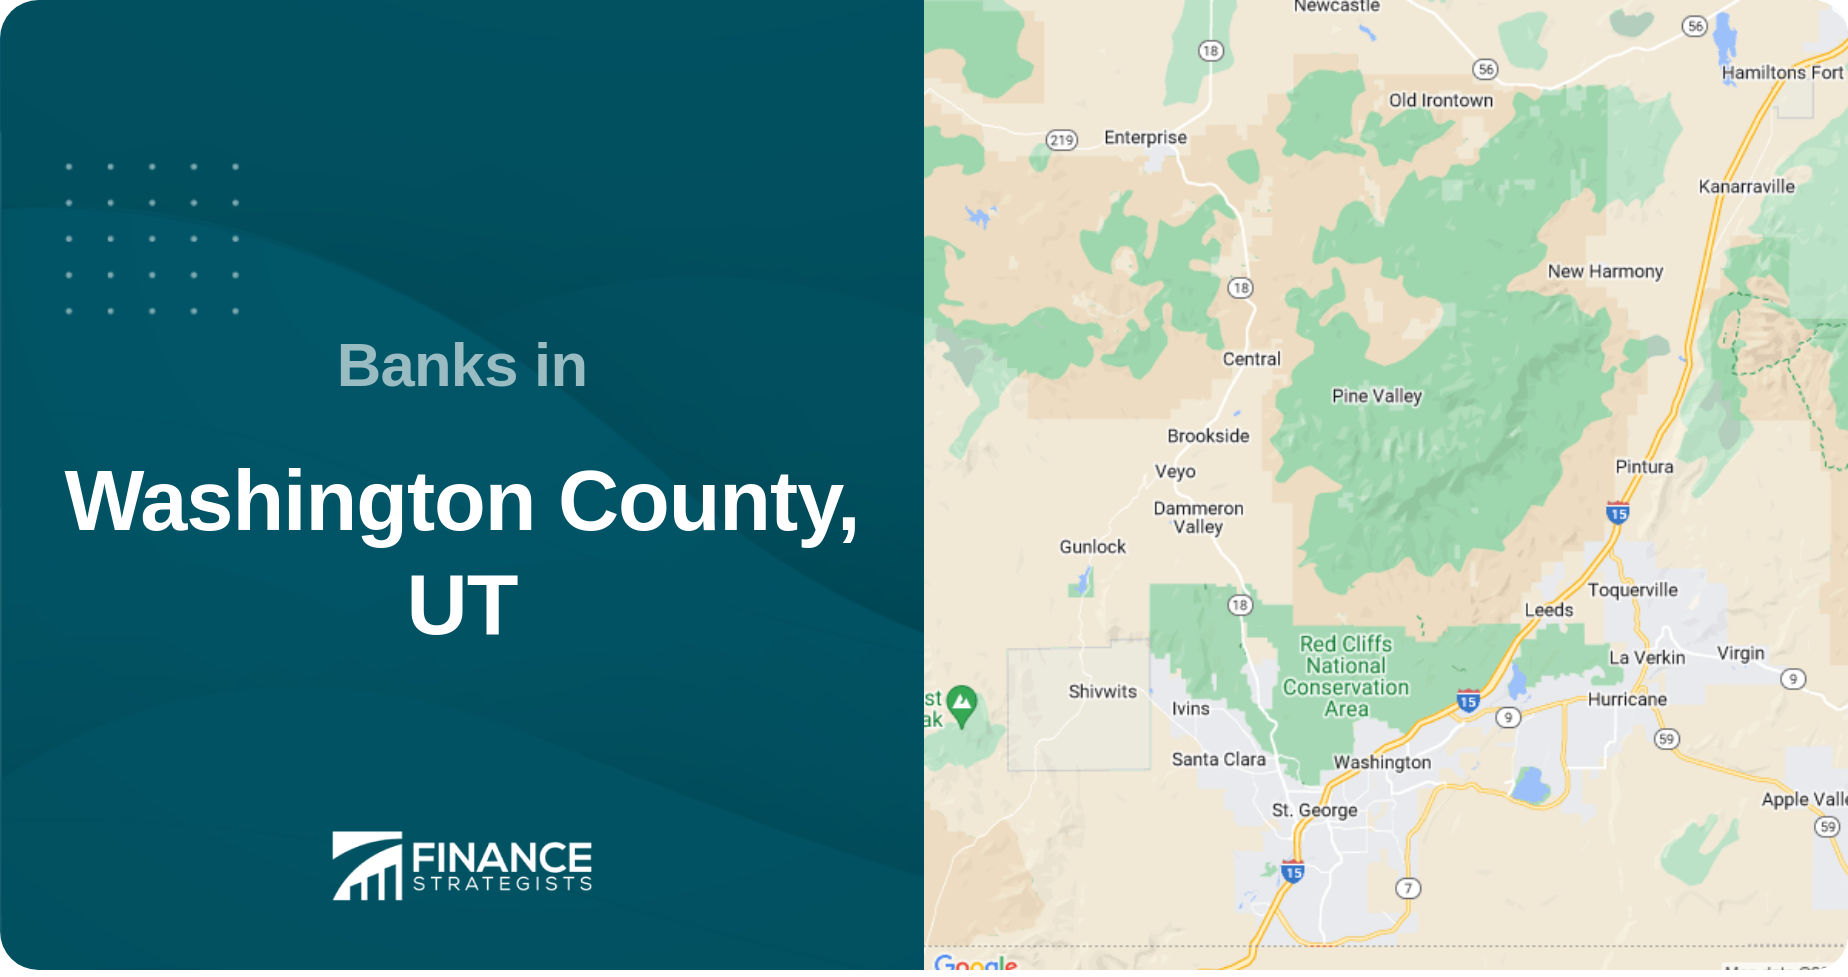 Banks in Washington County, UT